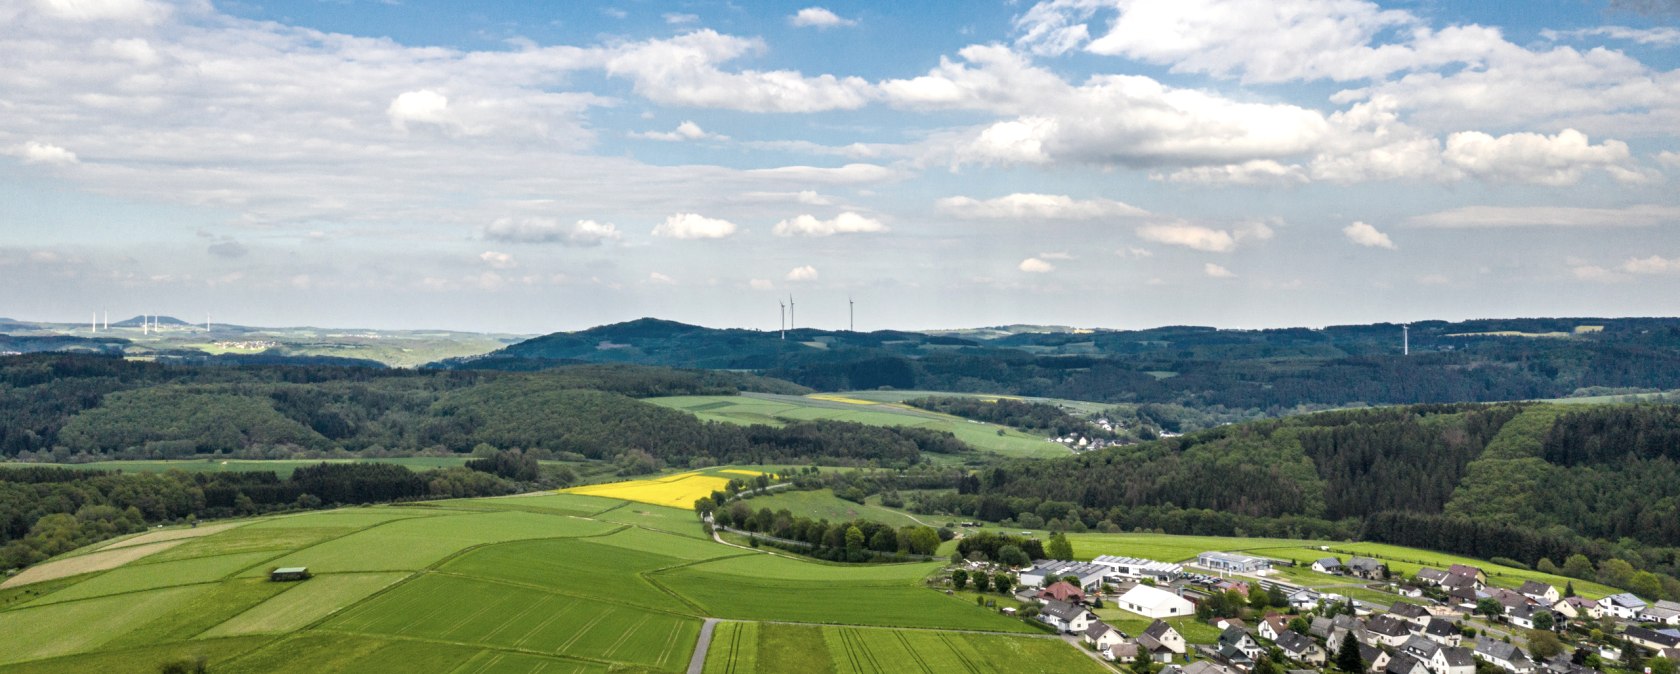 Hochkelberg-Panorama-Pfad-eifel-tourismus-gmbh-dominik-ketz, © Dominik Ketz/Eifel Tourismus GmbH/RPT